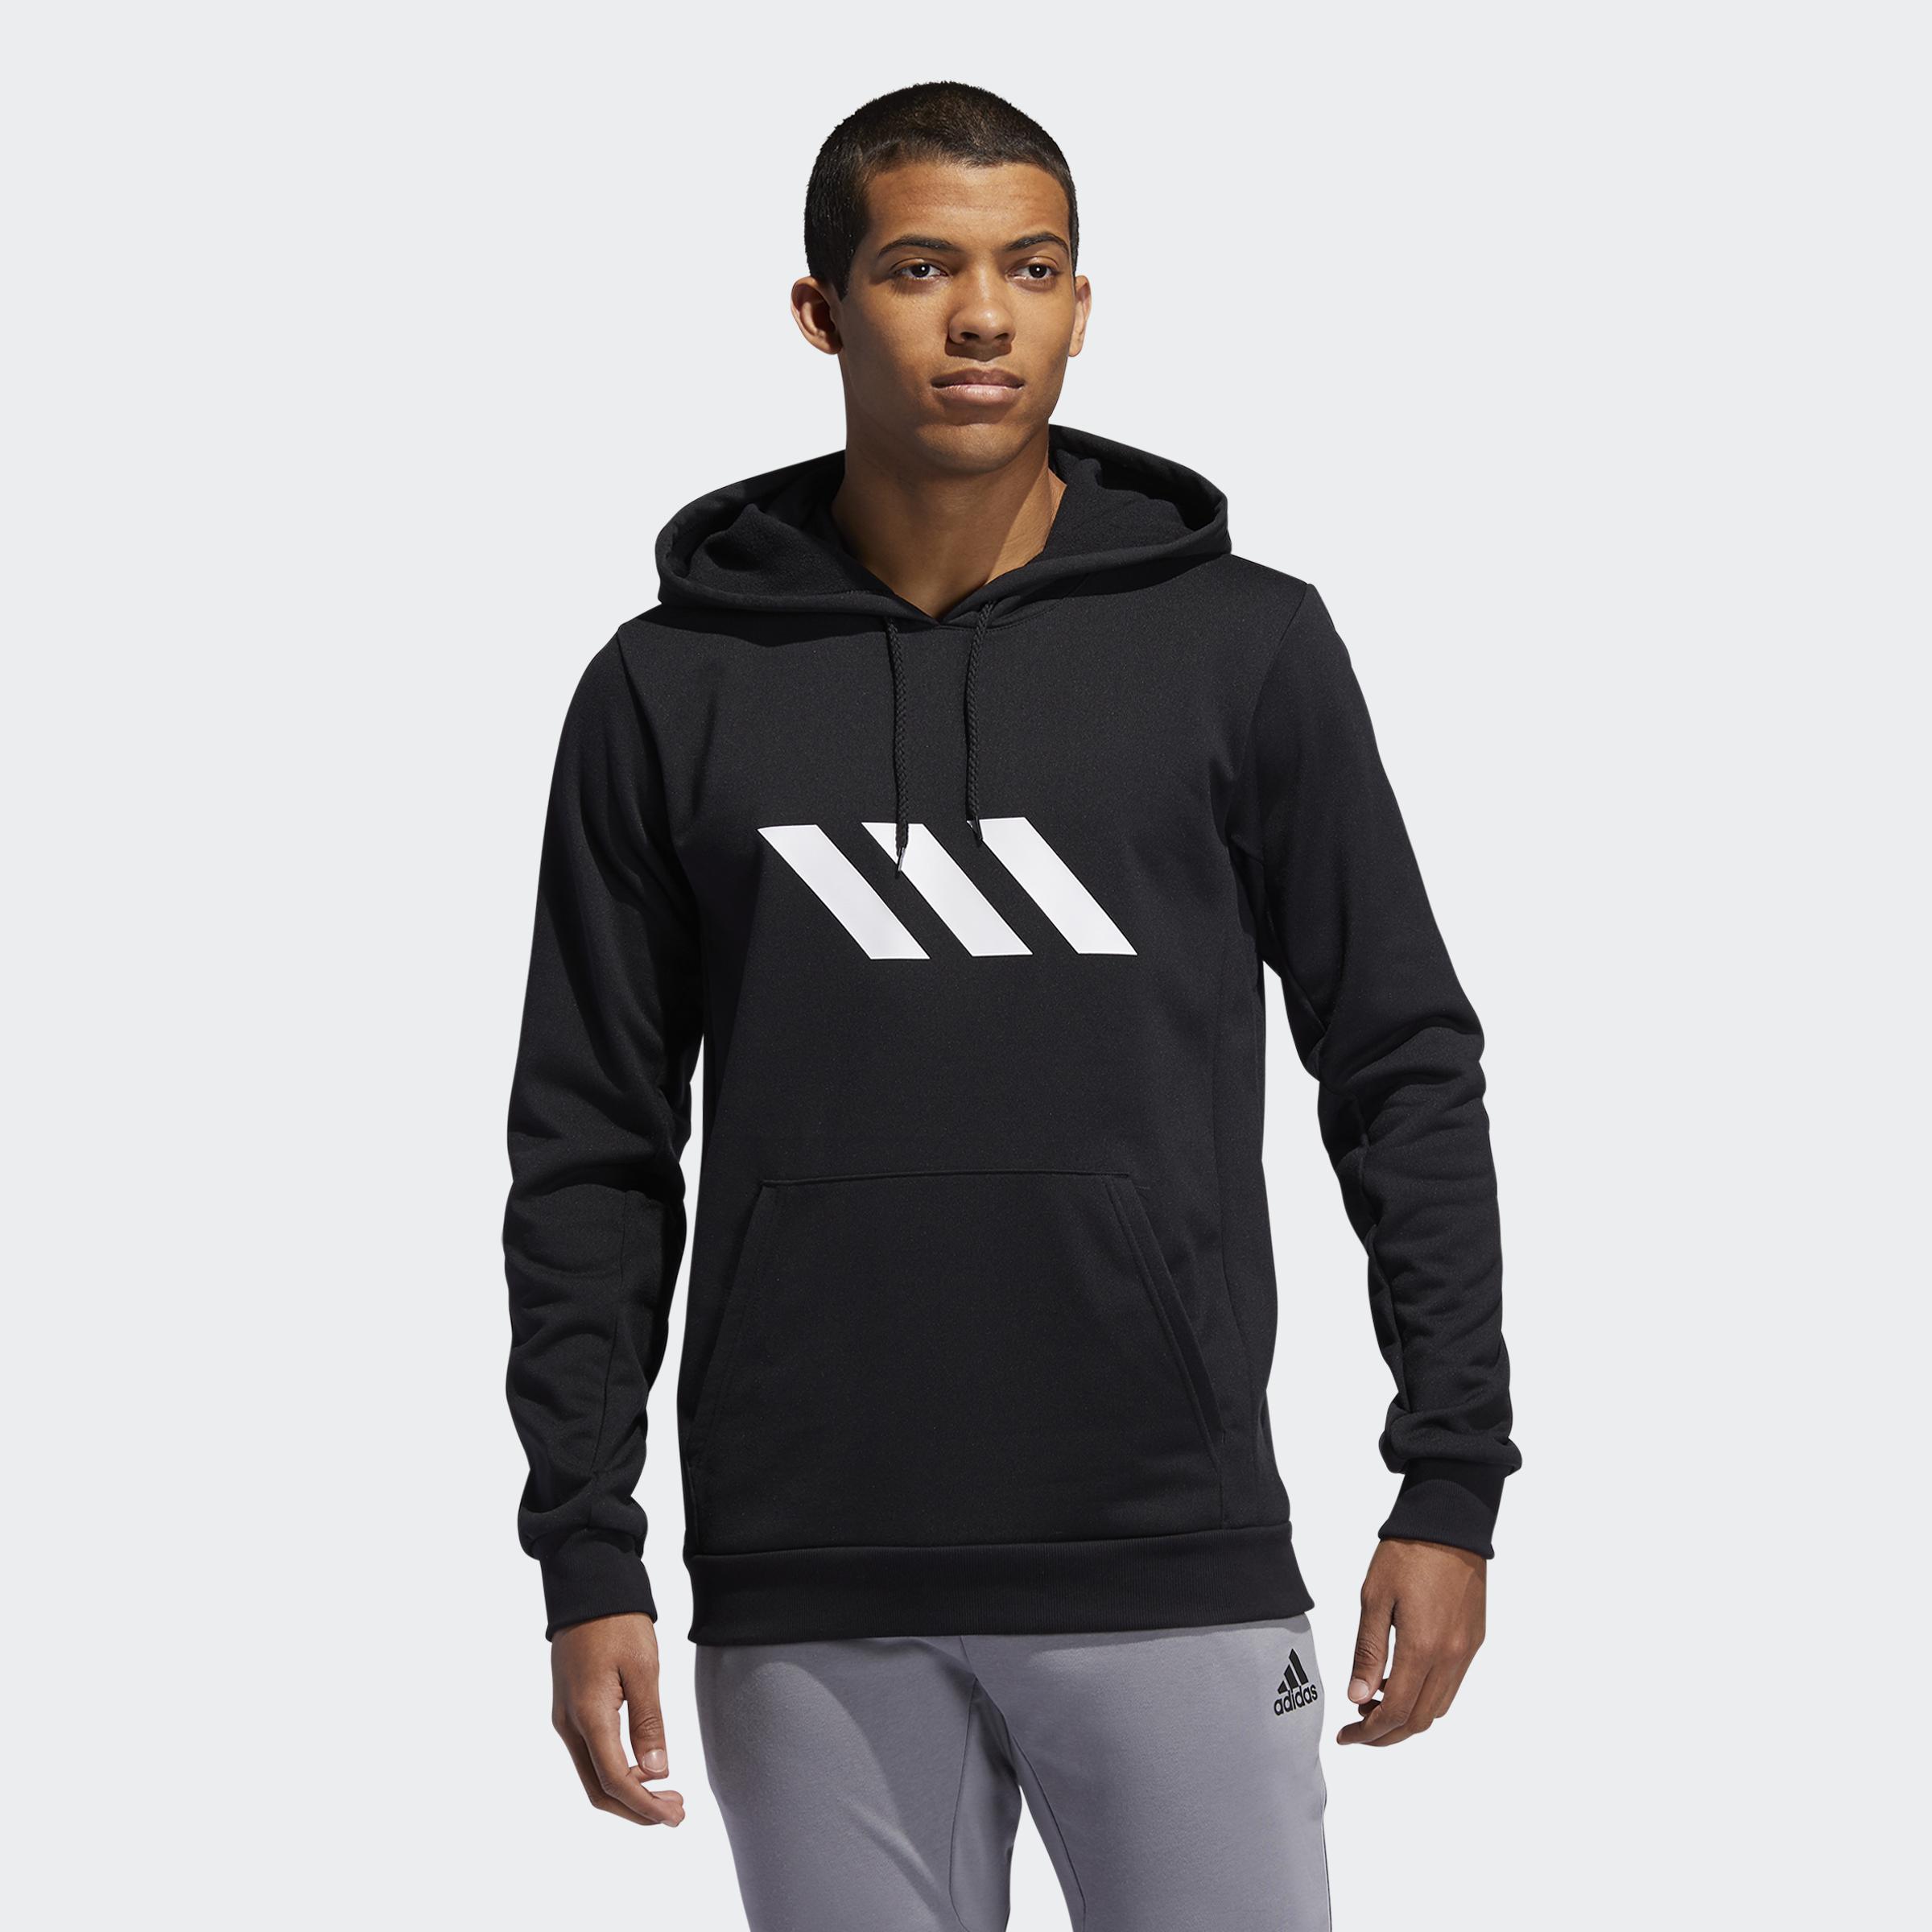 adidas Synthetic Spt B-ball Sweatshirt in Black for Men - Lyst